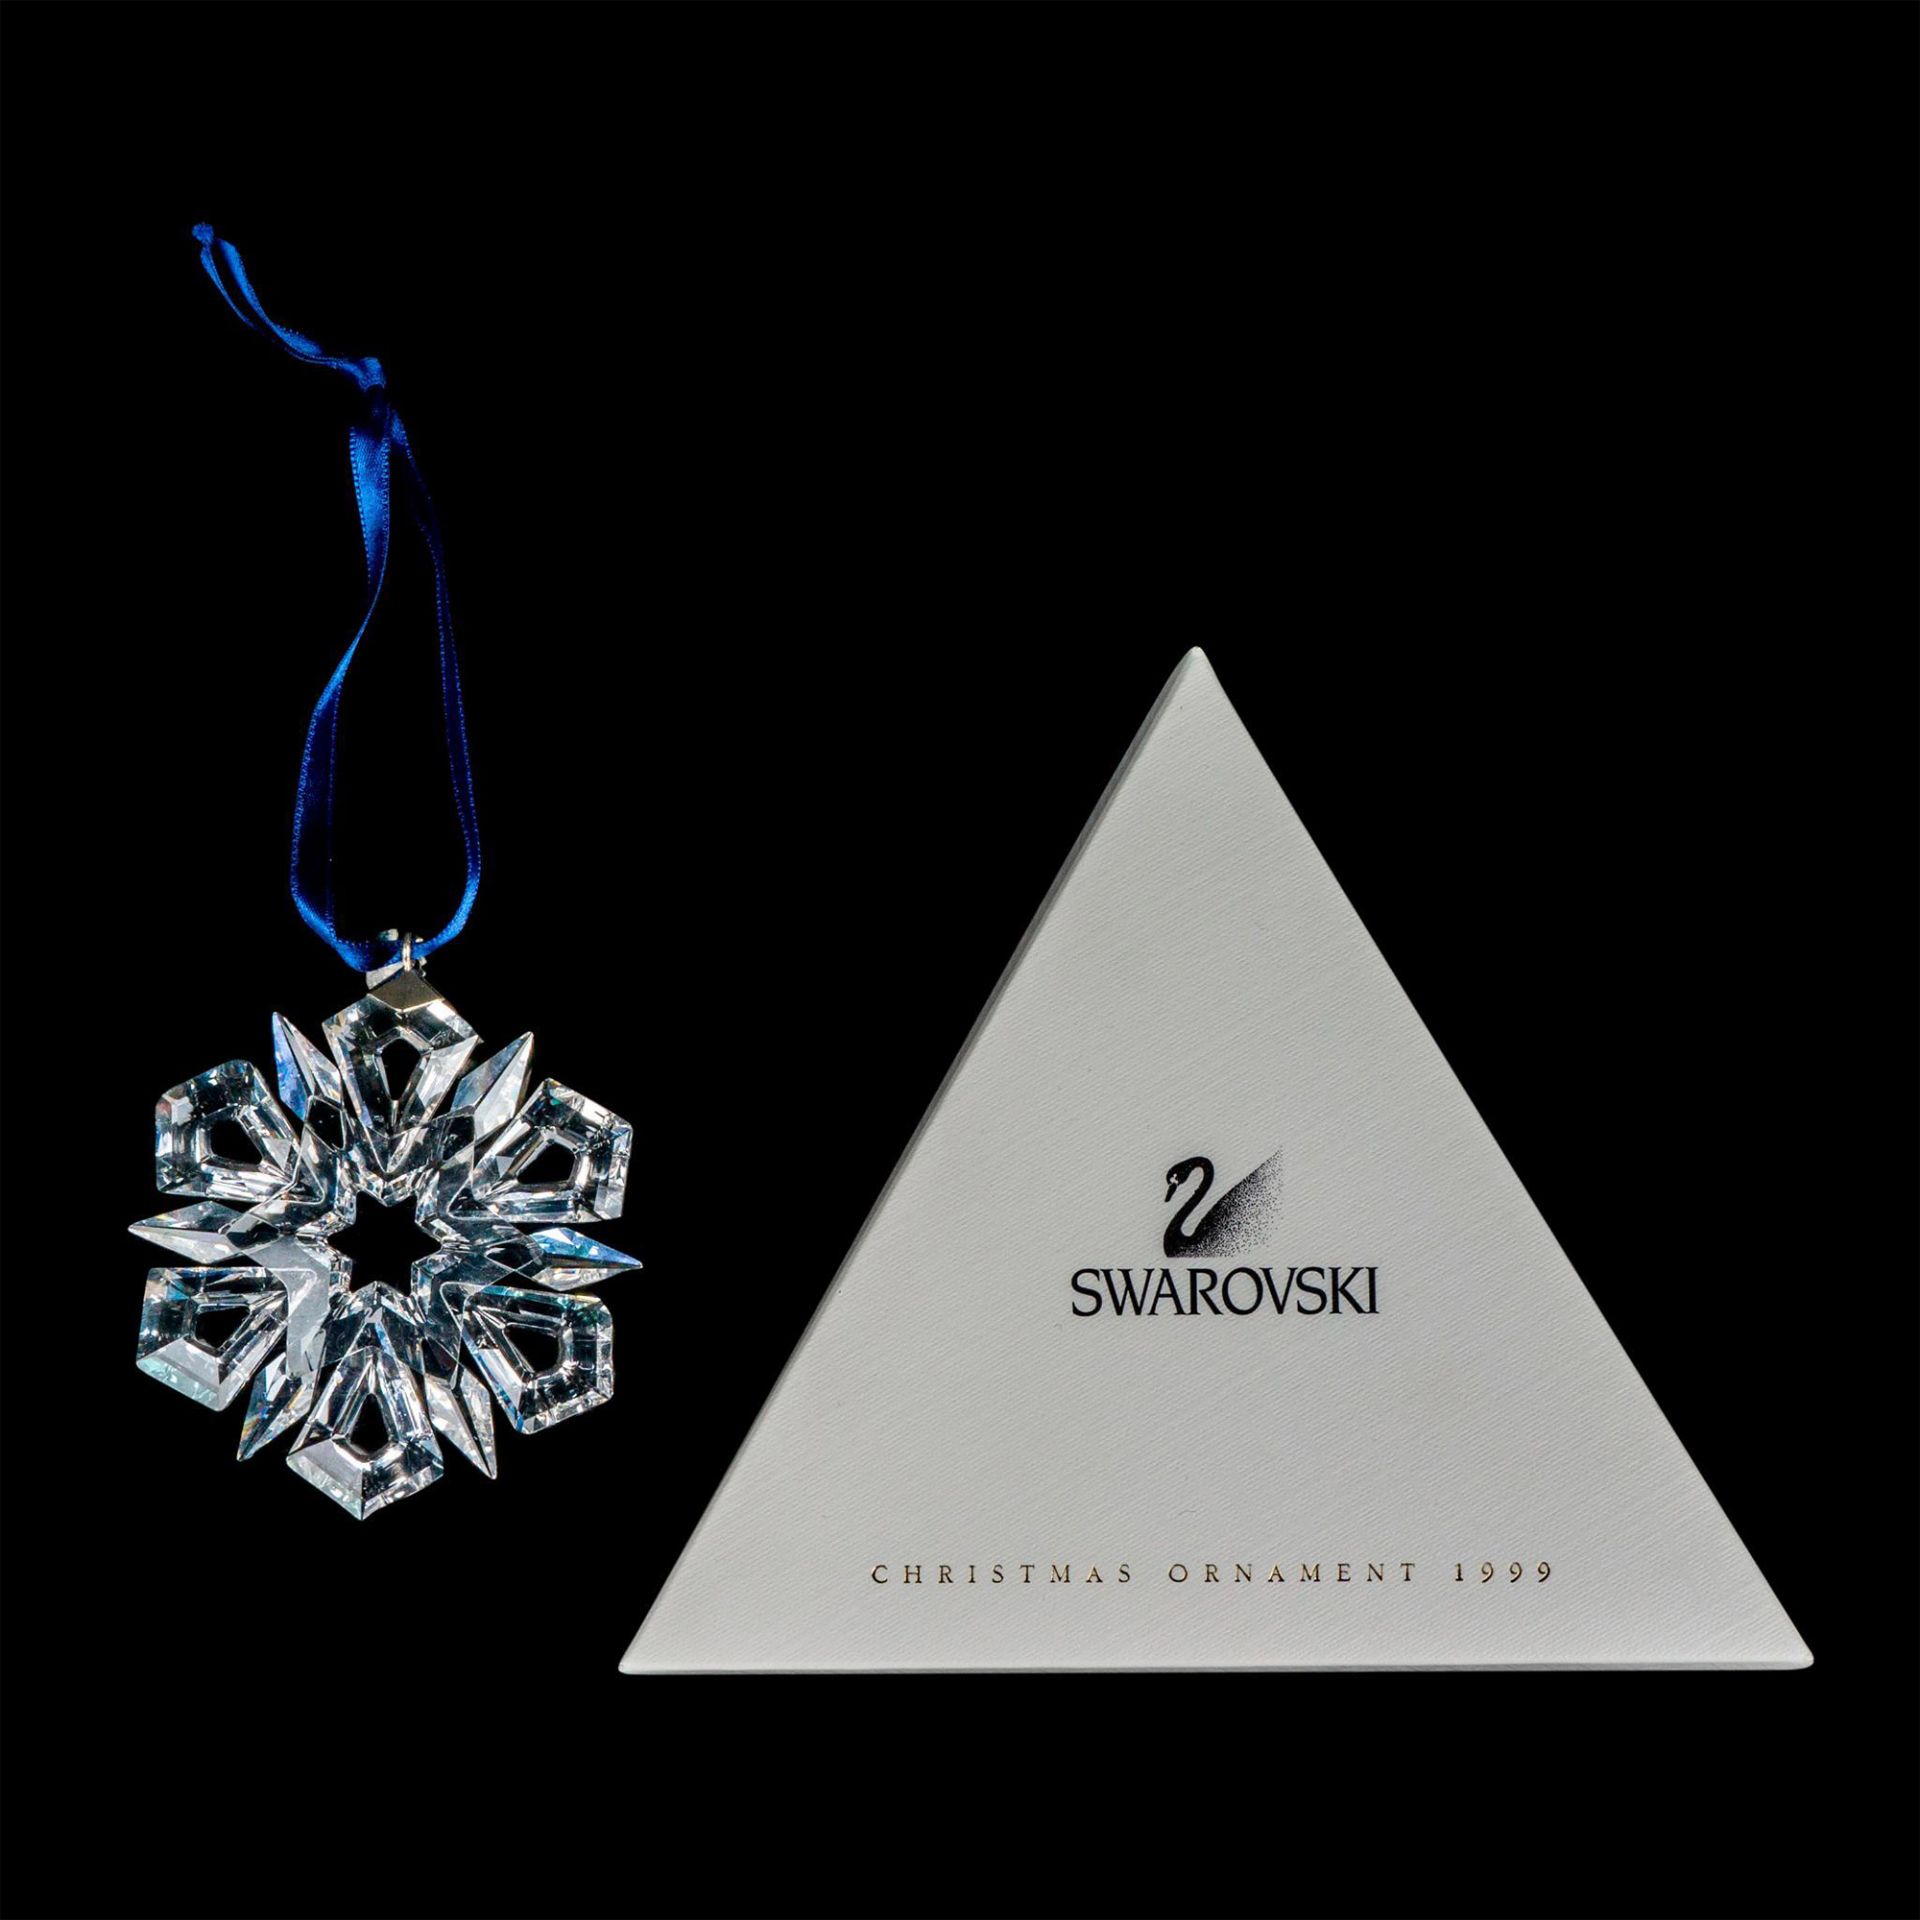 Swarovski Crystal Holiday Ornament 1999 - Image 2 of 2